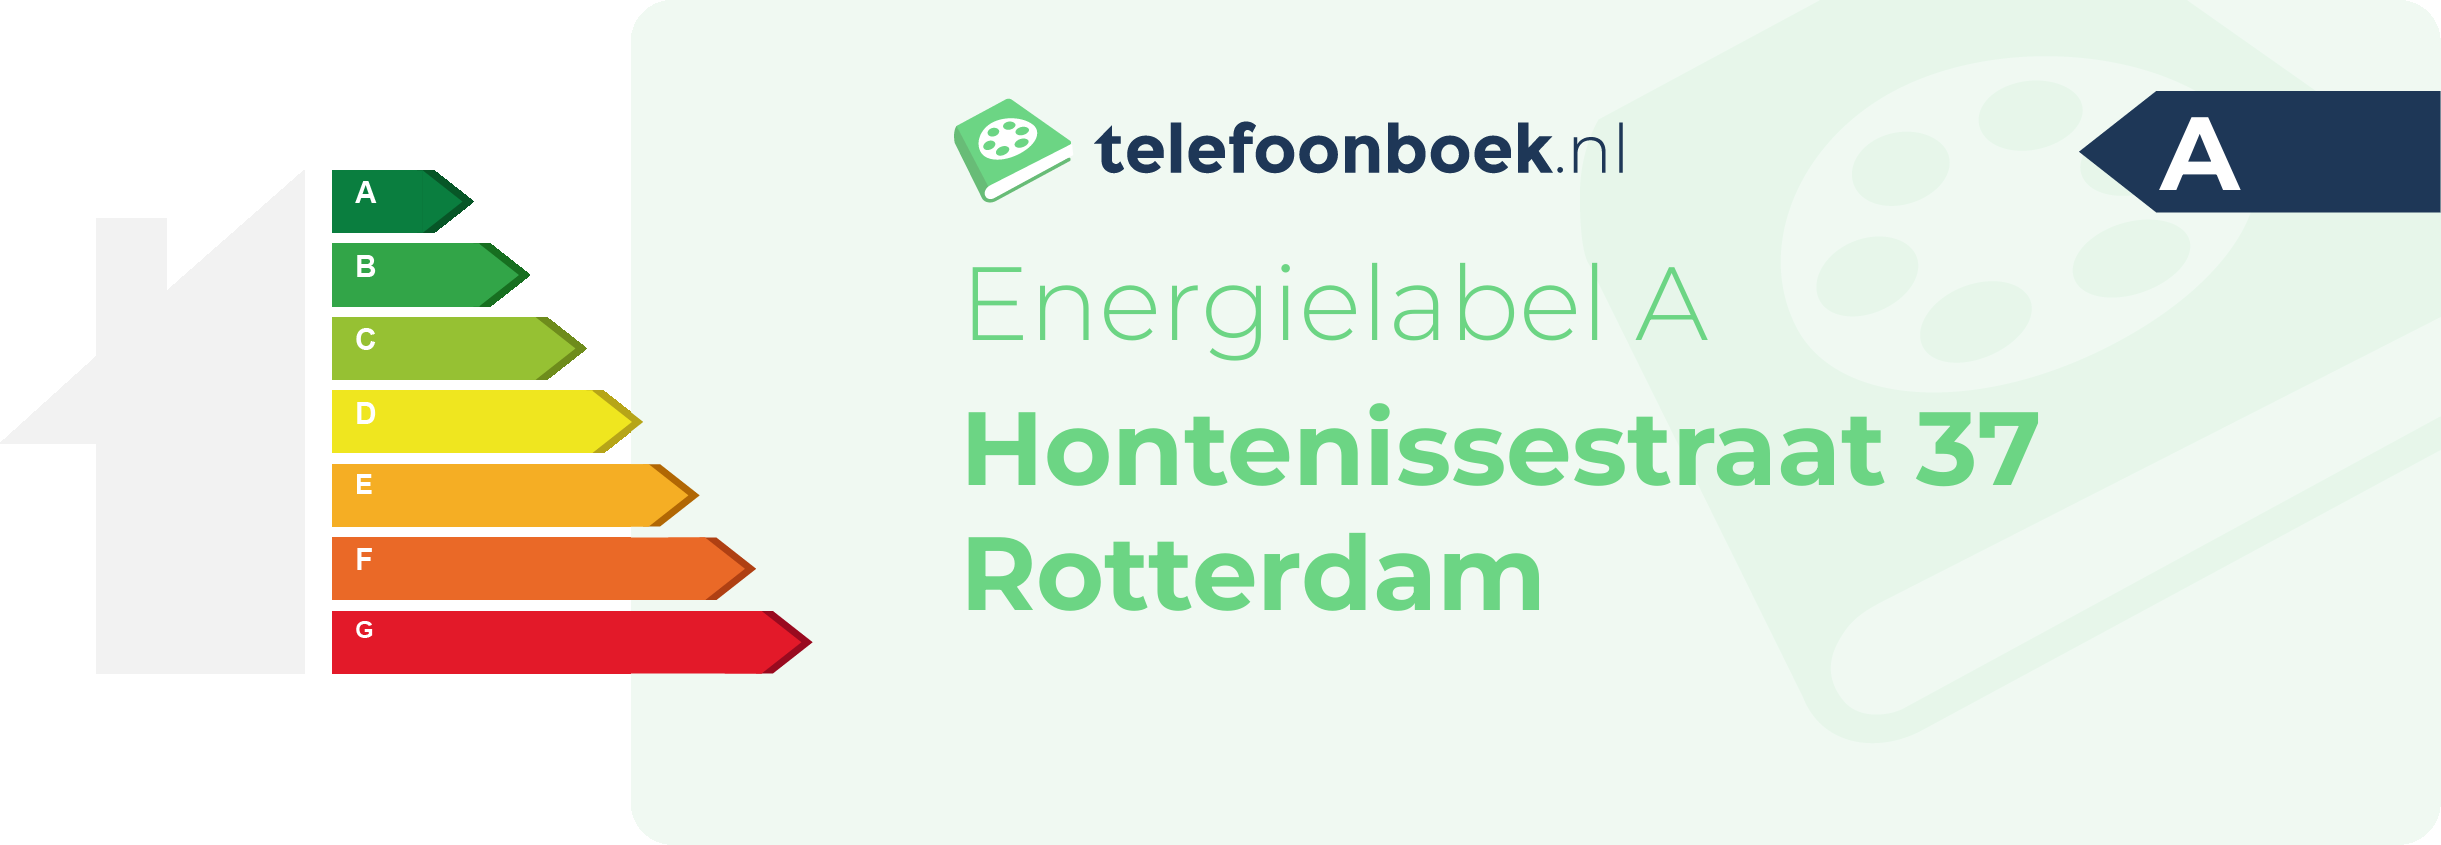 Energielabel Hontenissestraat 37 Rotterdam